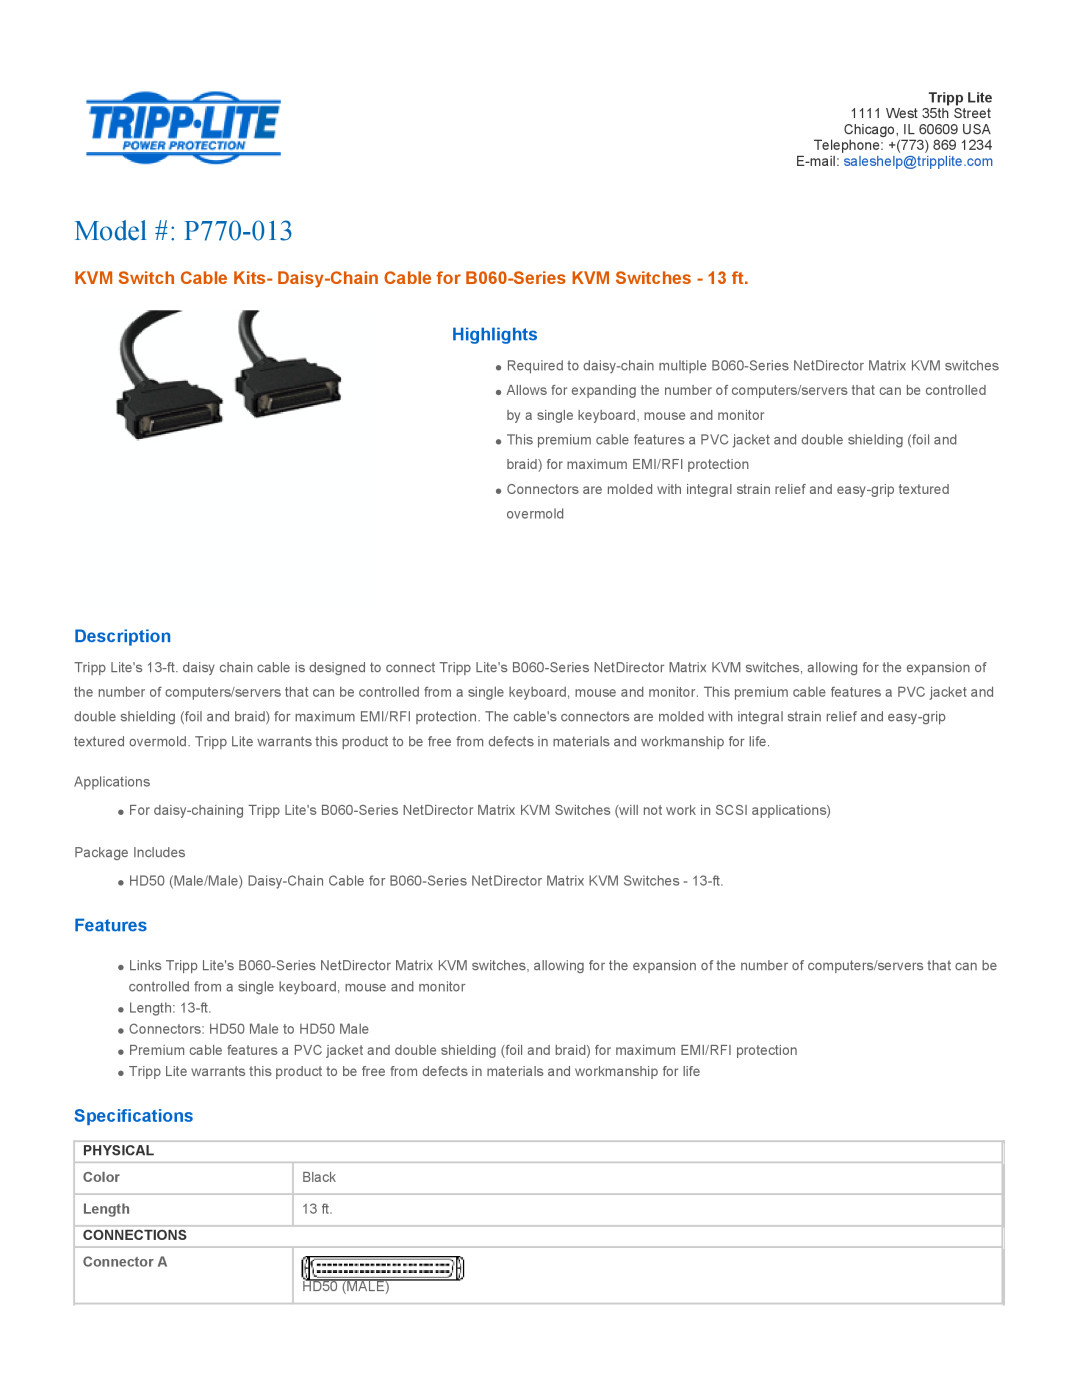 Tripp Lite specifications Color, Black, Length, 13 ft, Connector A, Model # P770-013, Highlights, Description, Features 